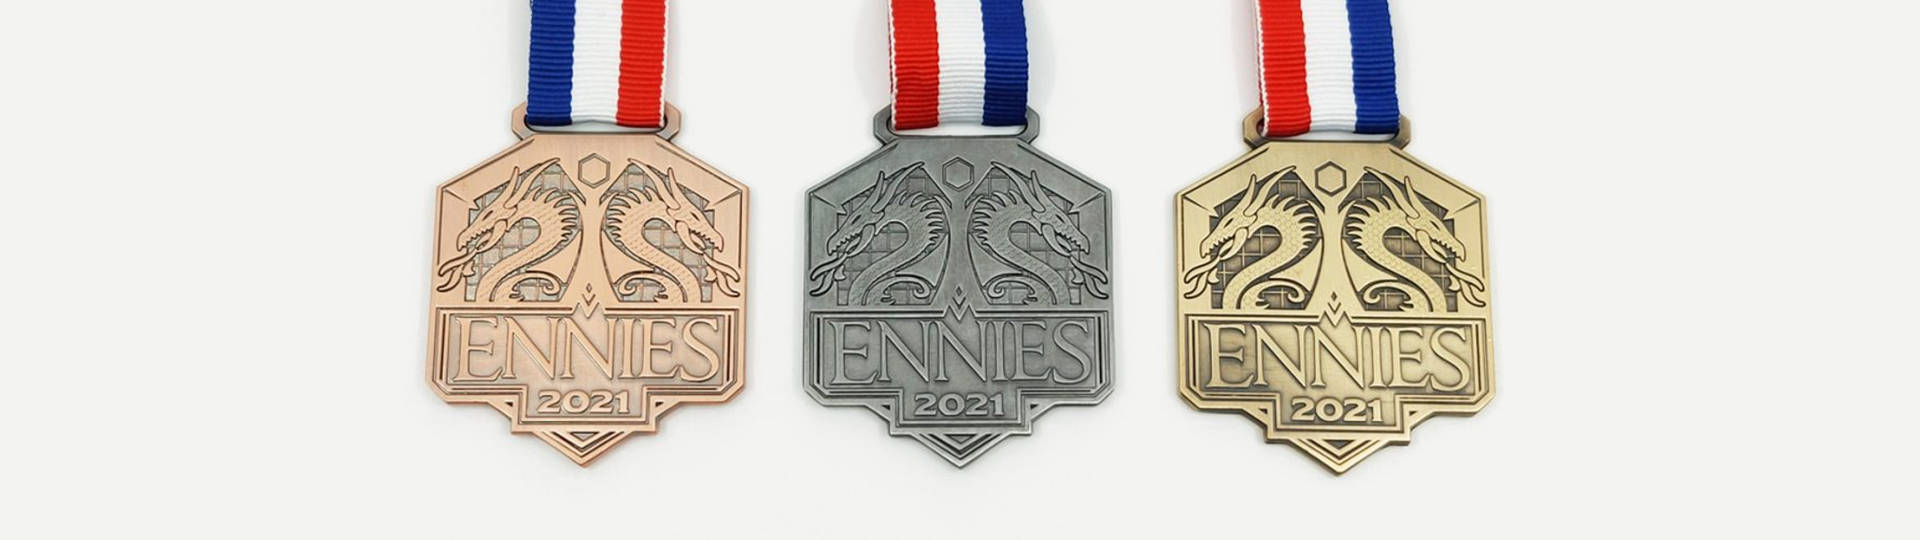 Ennie Awards 2021 Nominees slice